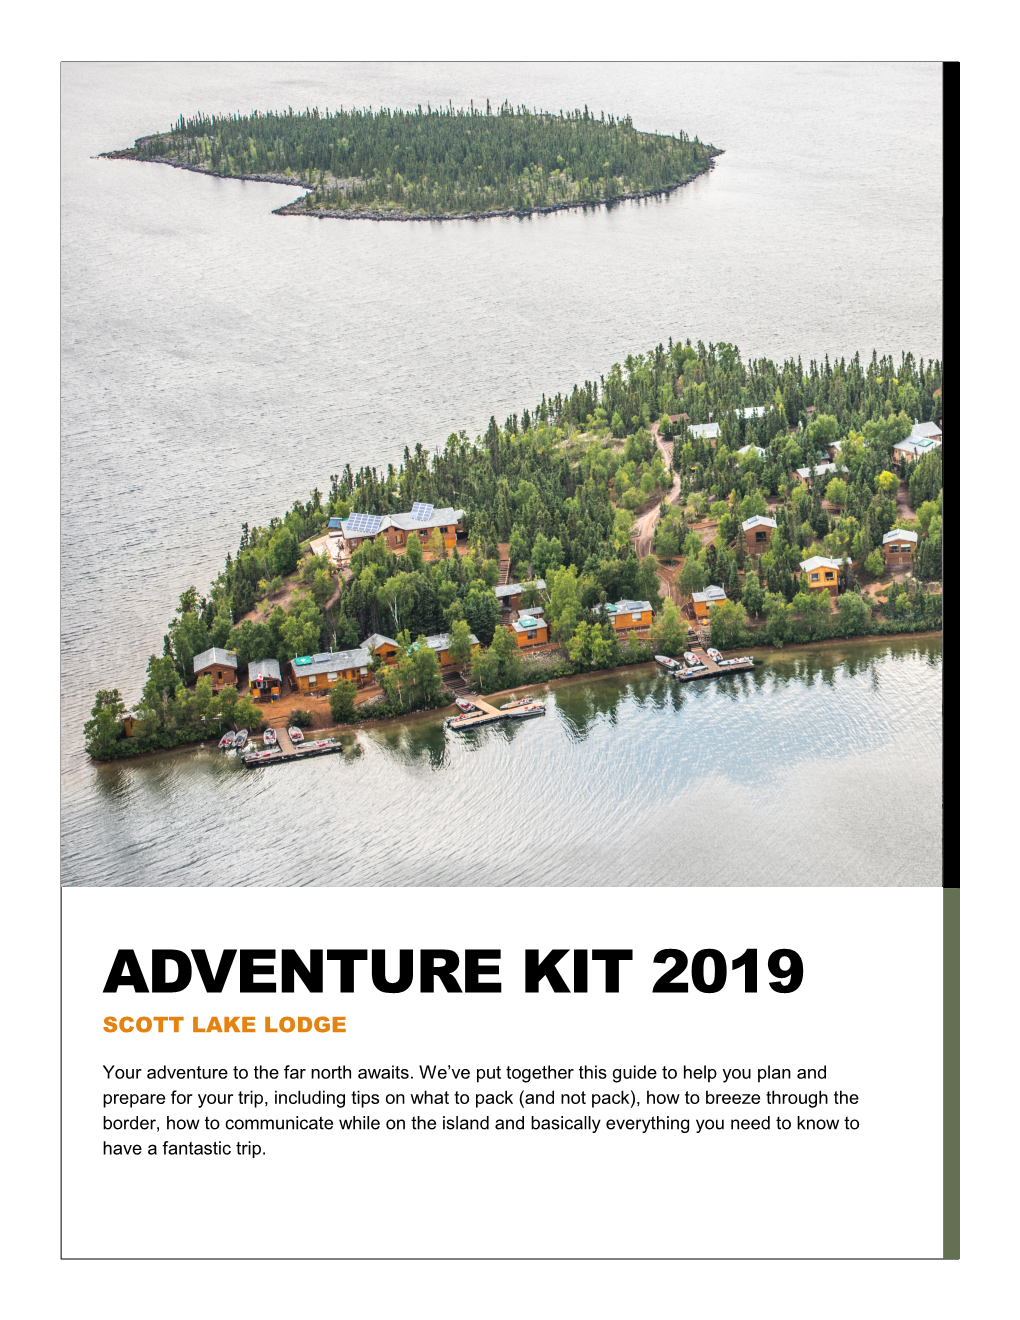 Adventure Kit 2019